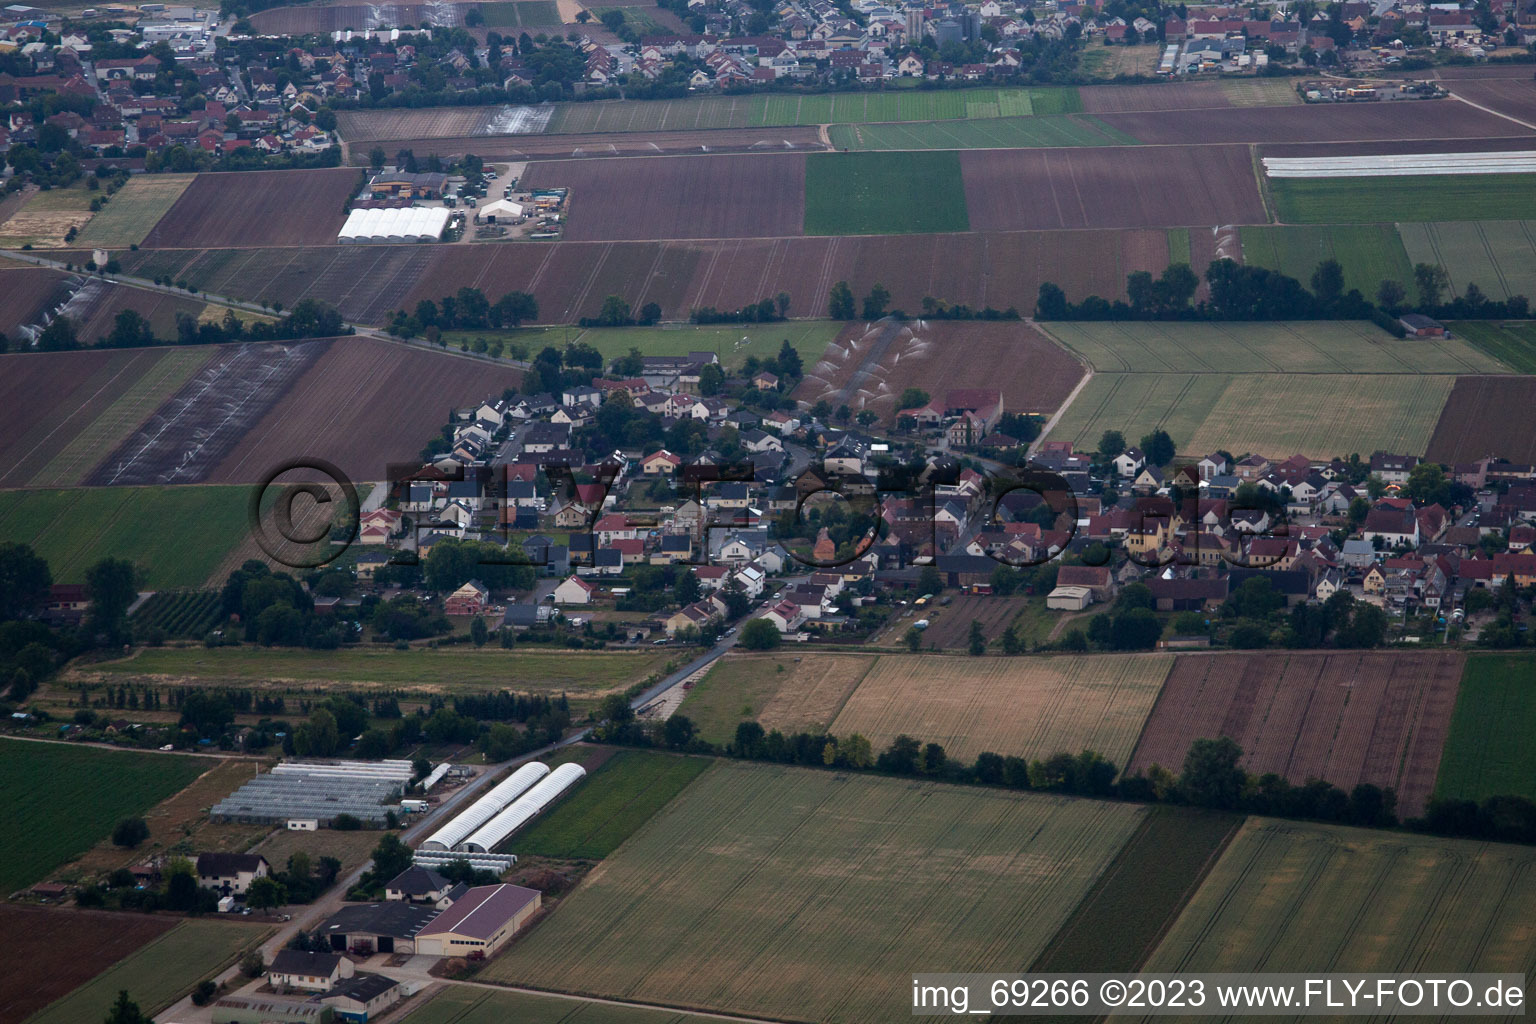 Rödersheim-Gronau in the state Rhineland-Palatinate, Germany seen from above